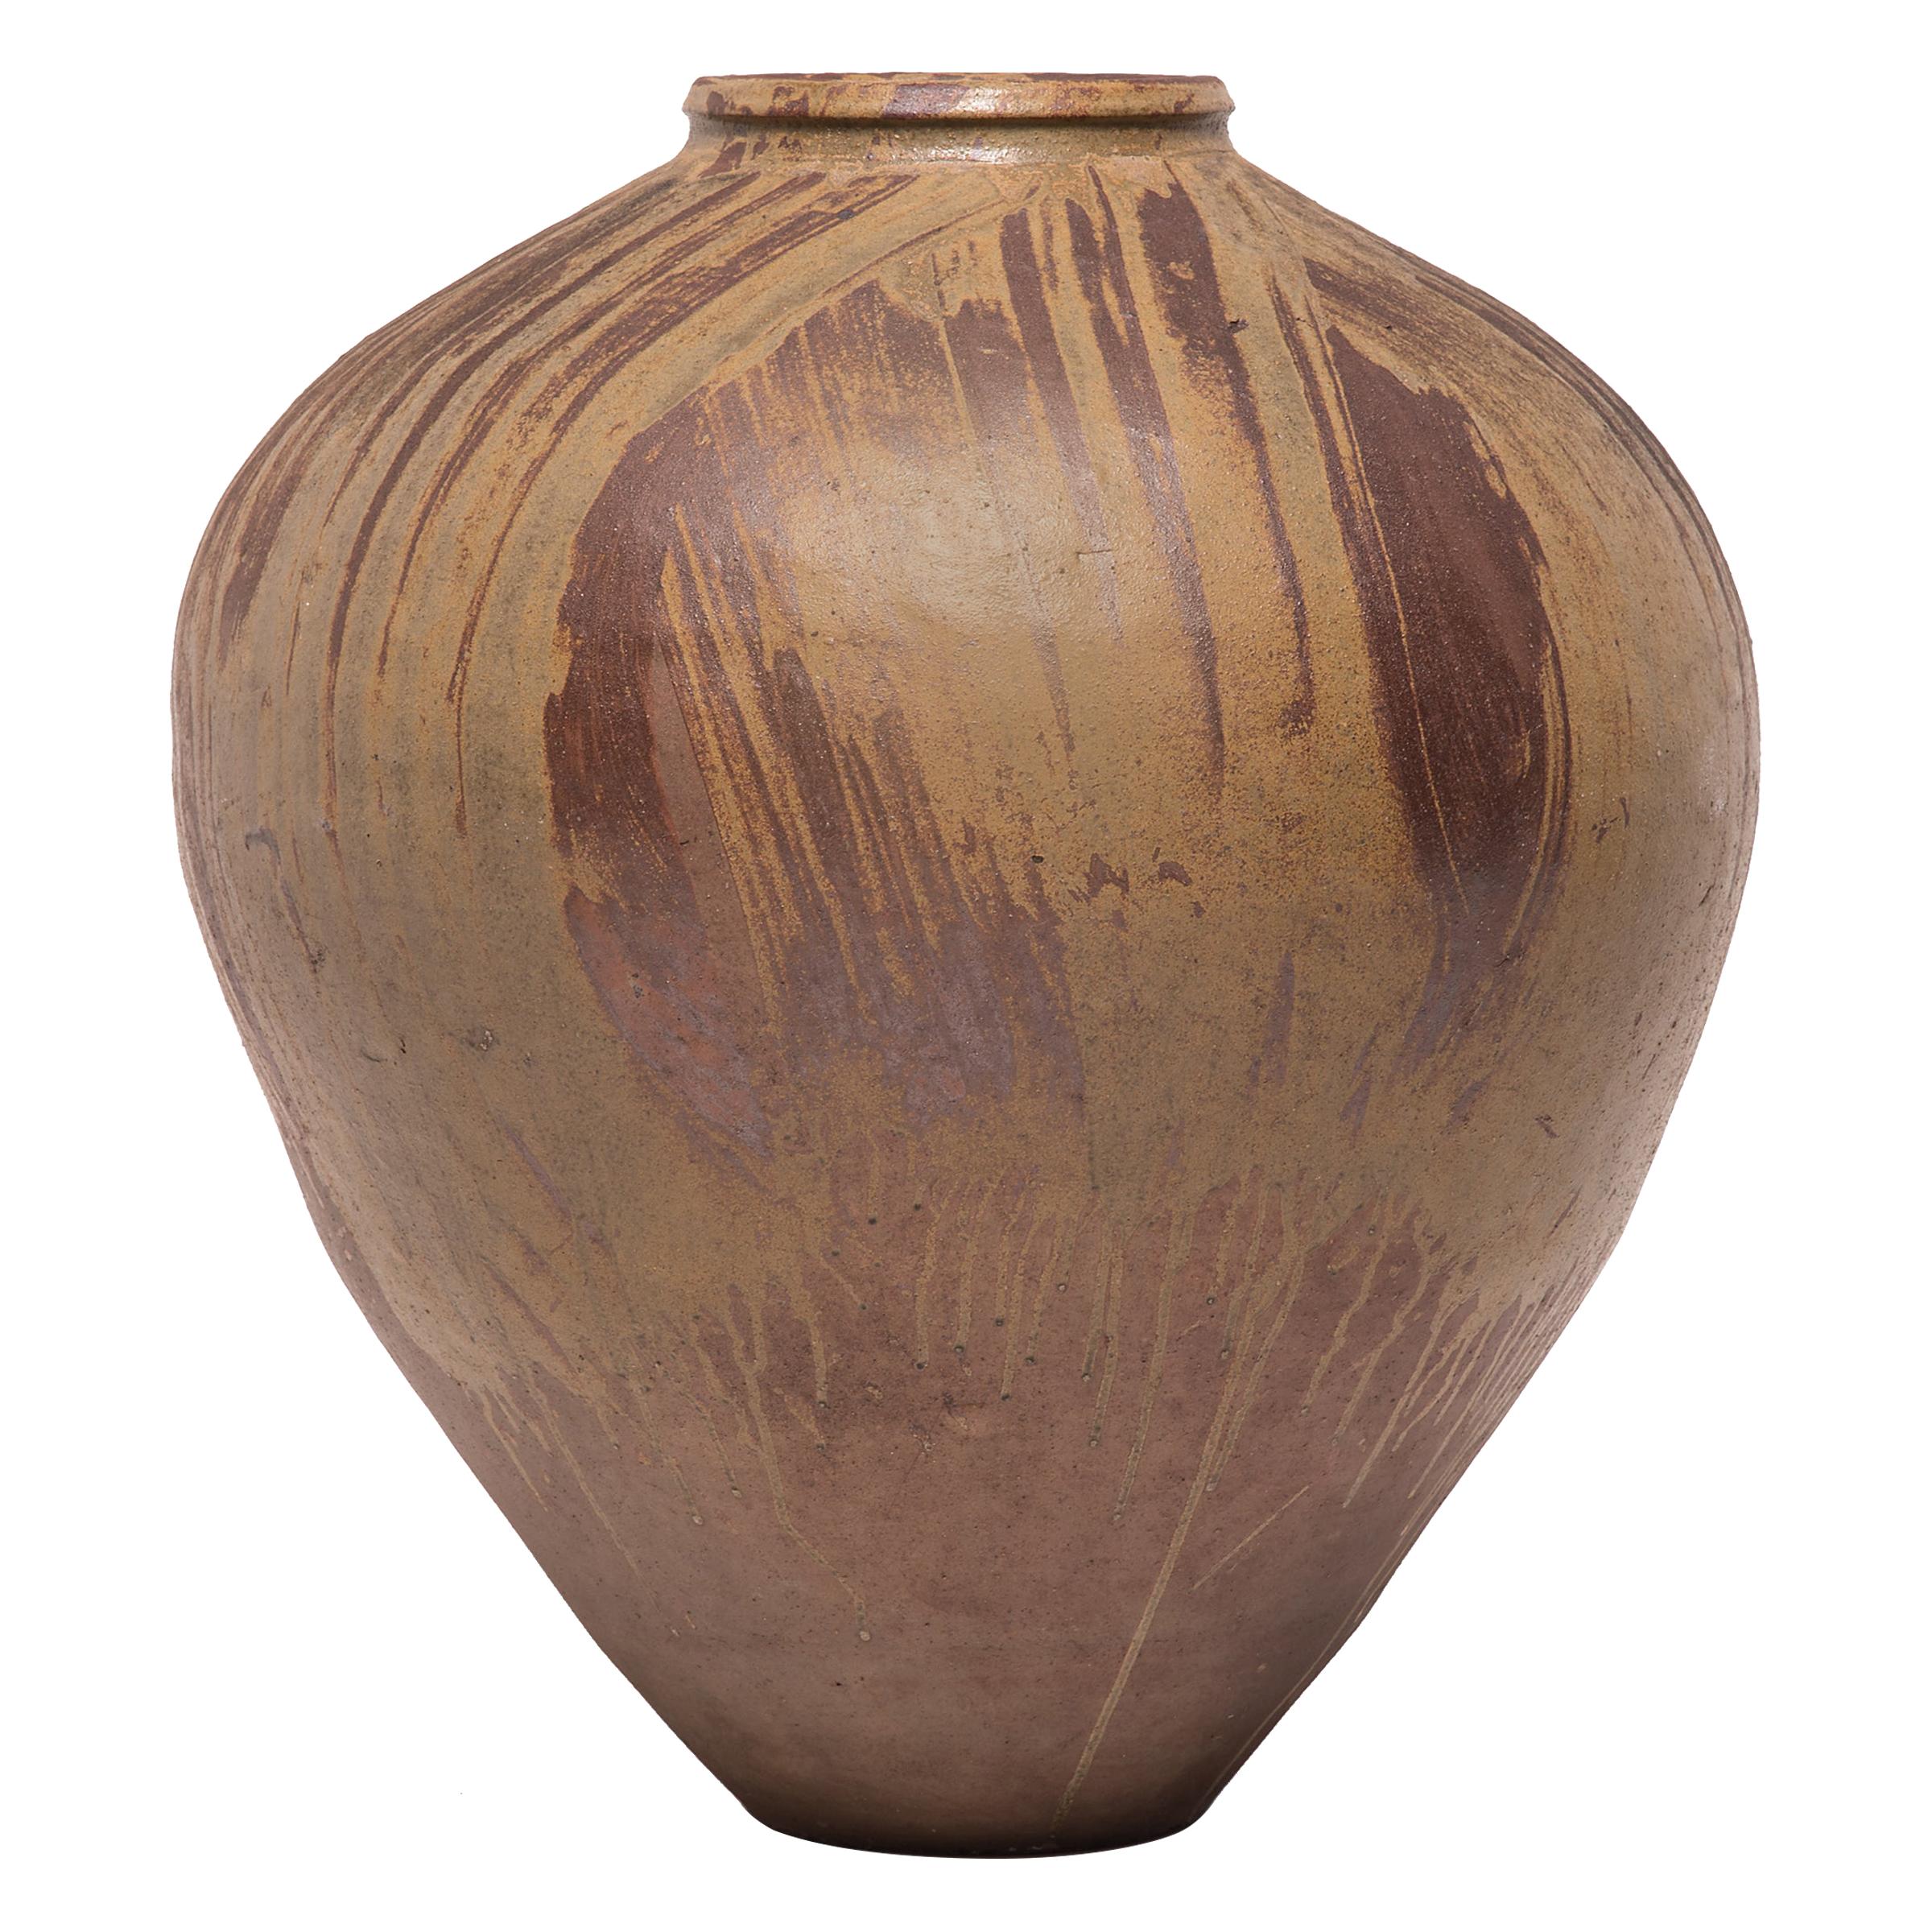 Early 20th Century Chinese Swirled Glaze Wine Jar